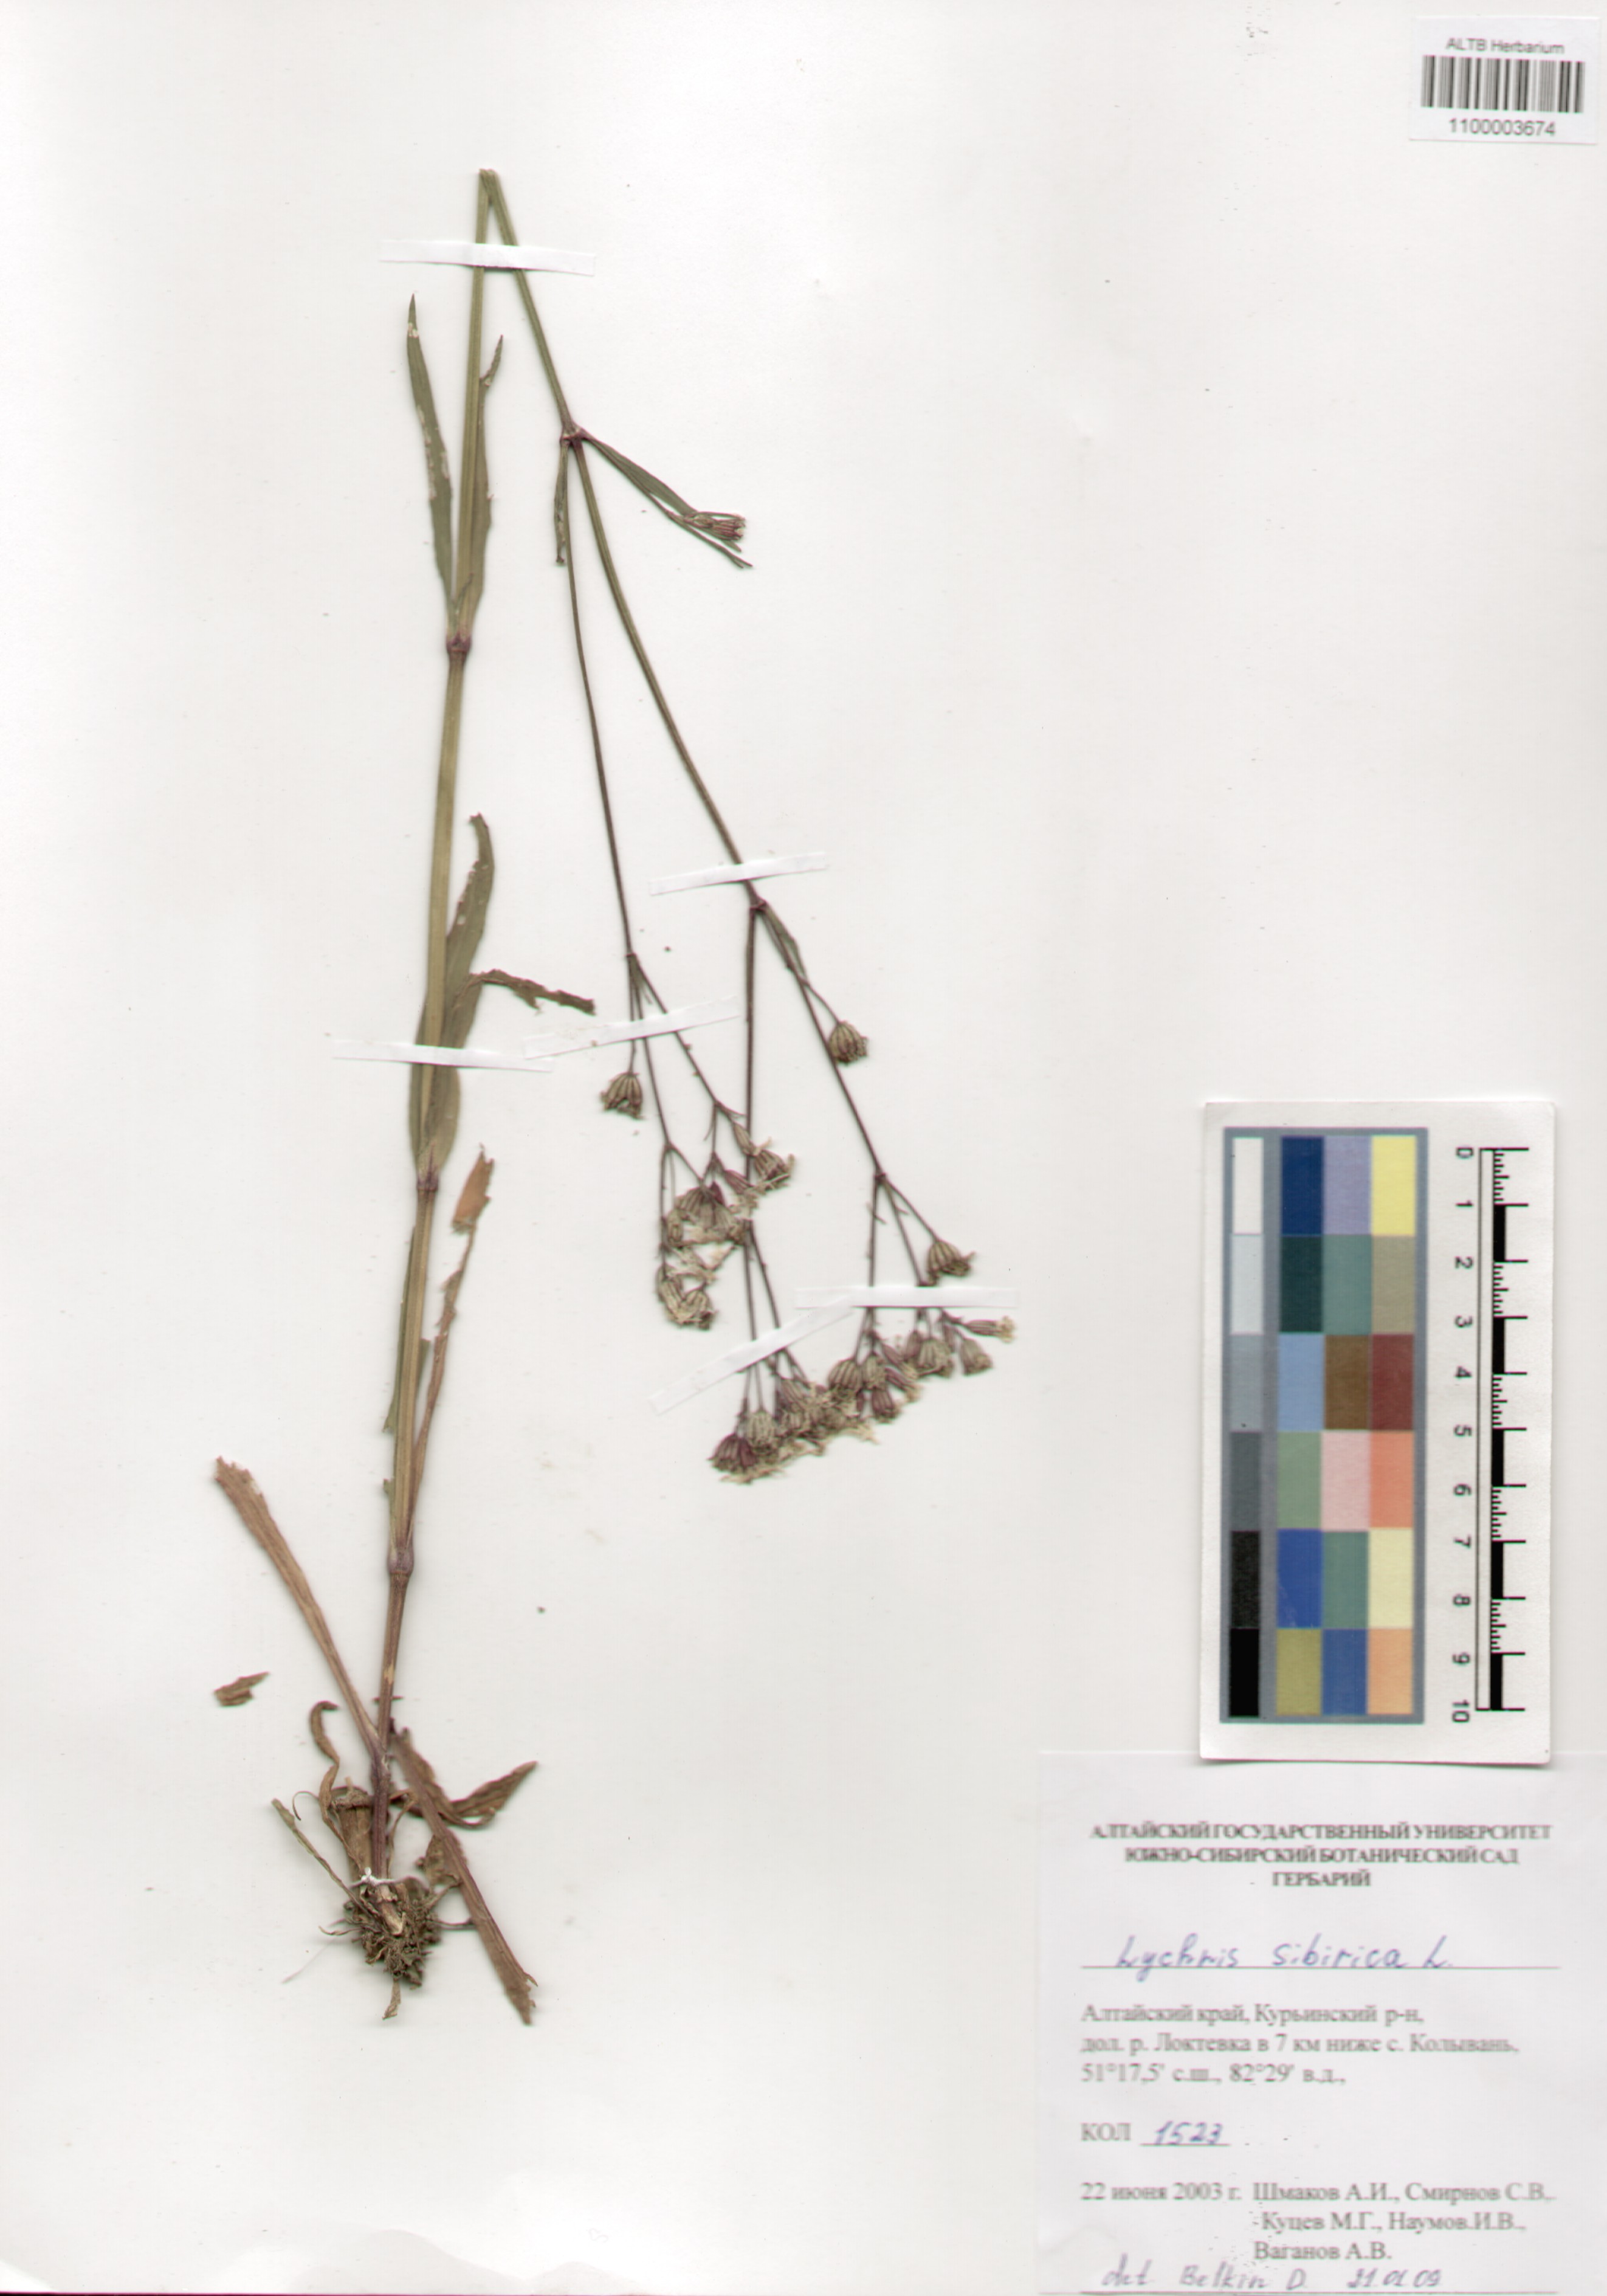 Caryophyllaceae,Lychnis sibirica L.